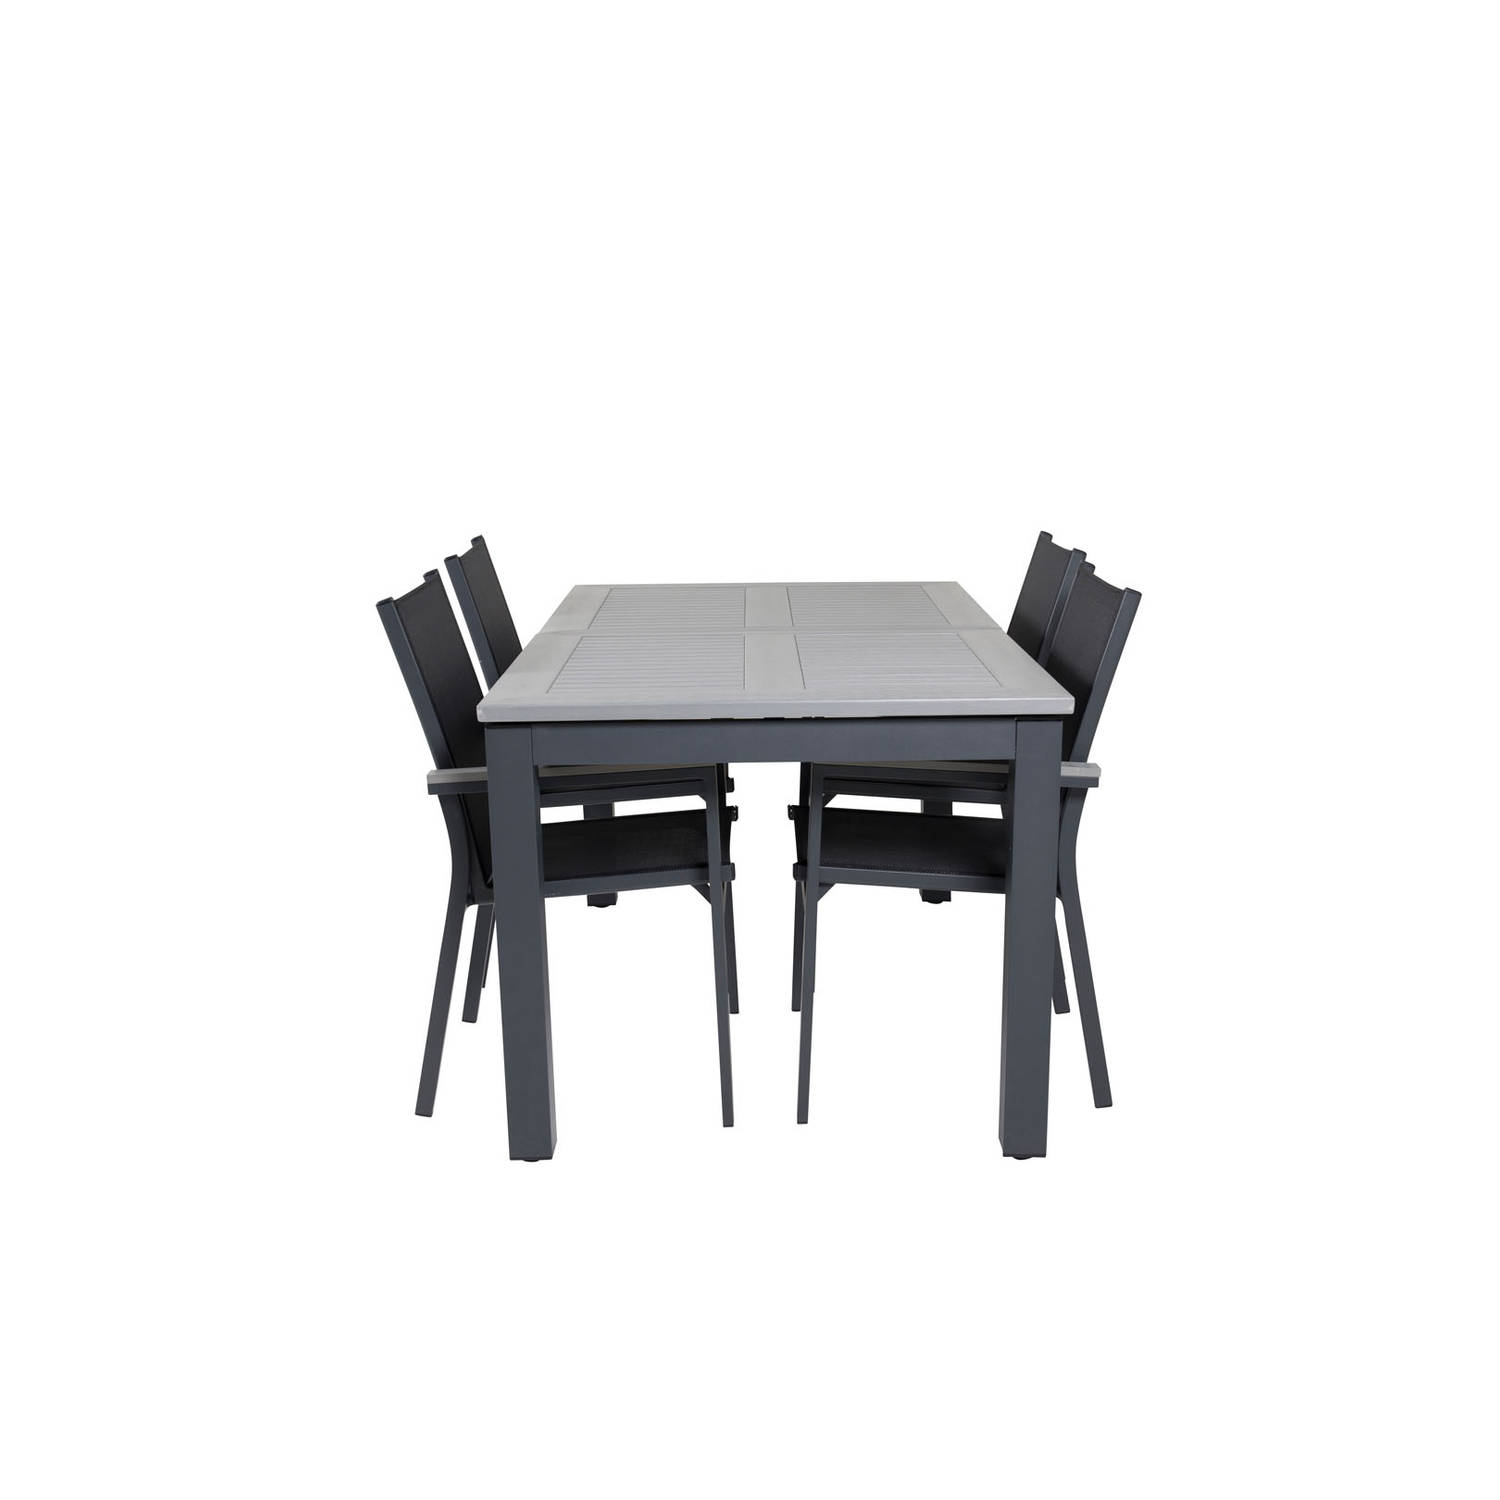 Albany tuinmeubelset tafel 100x160/240cm en 4 stoel Parma zwart, grijs.